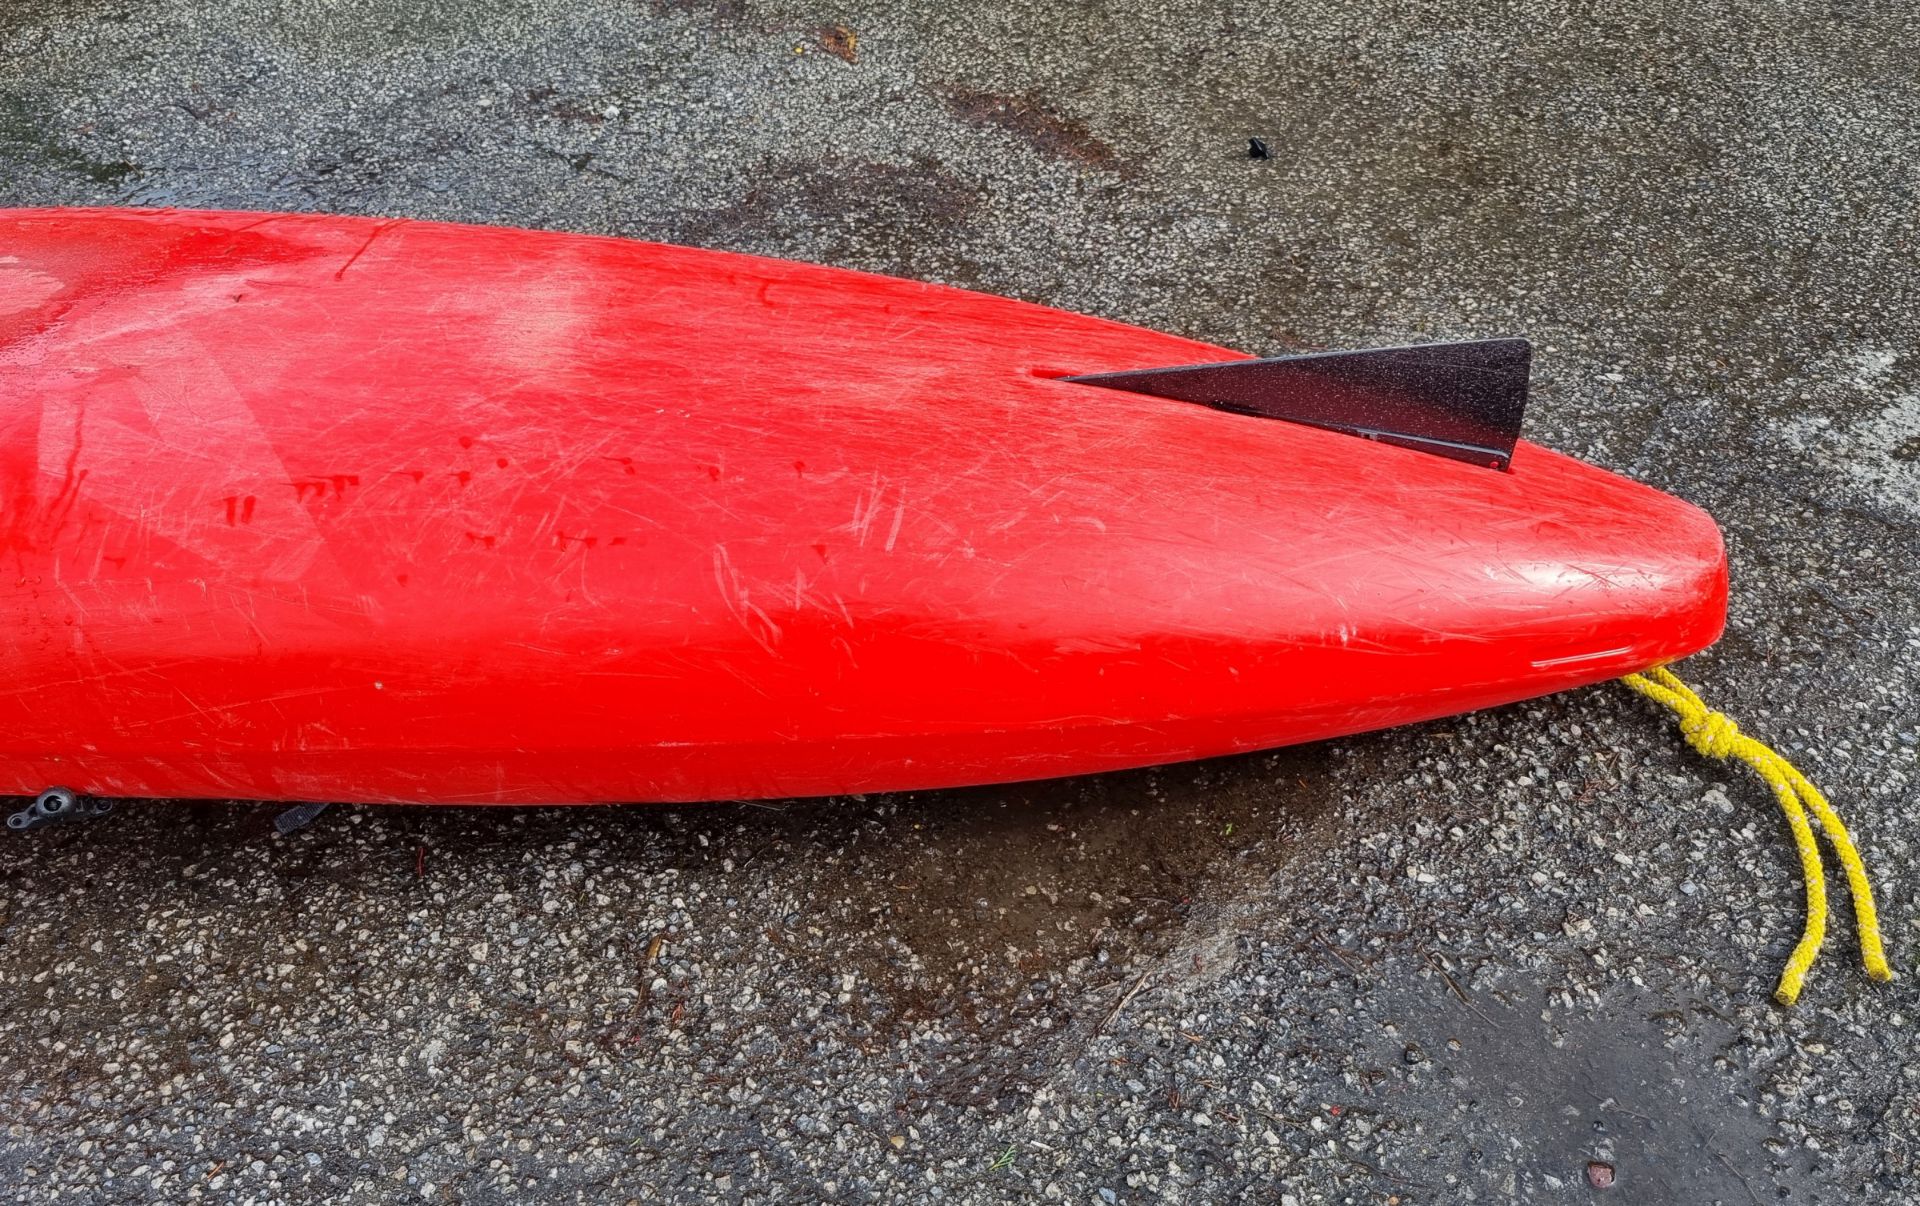 Dagger Katana polyethylene kayak - red - W 3200 x D 660 x H 420mm - Image 6 of 8